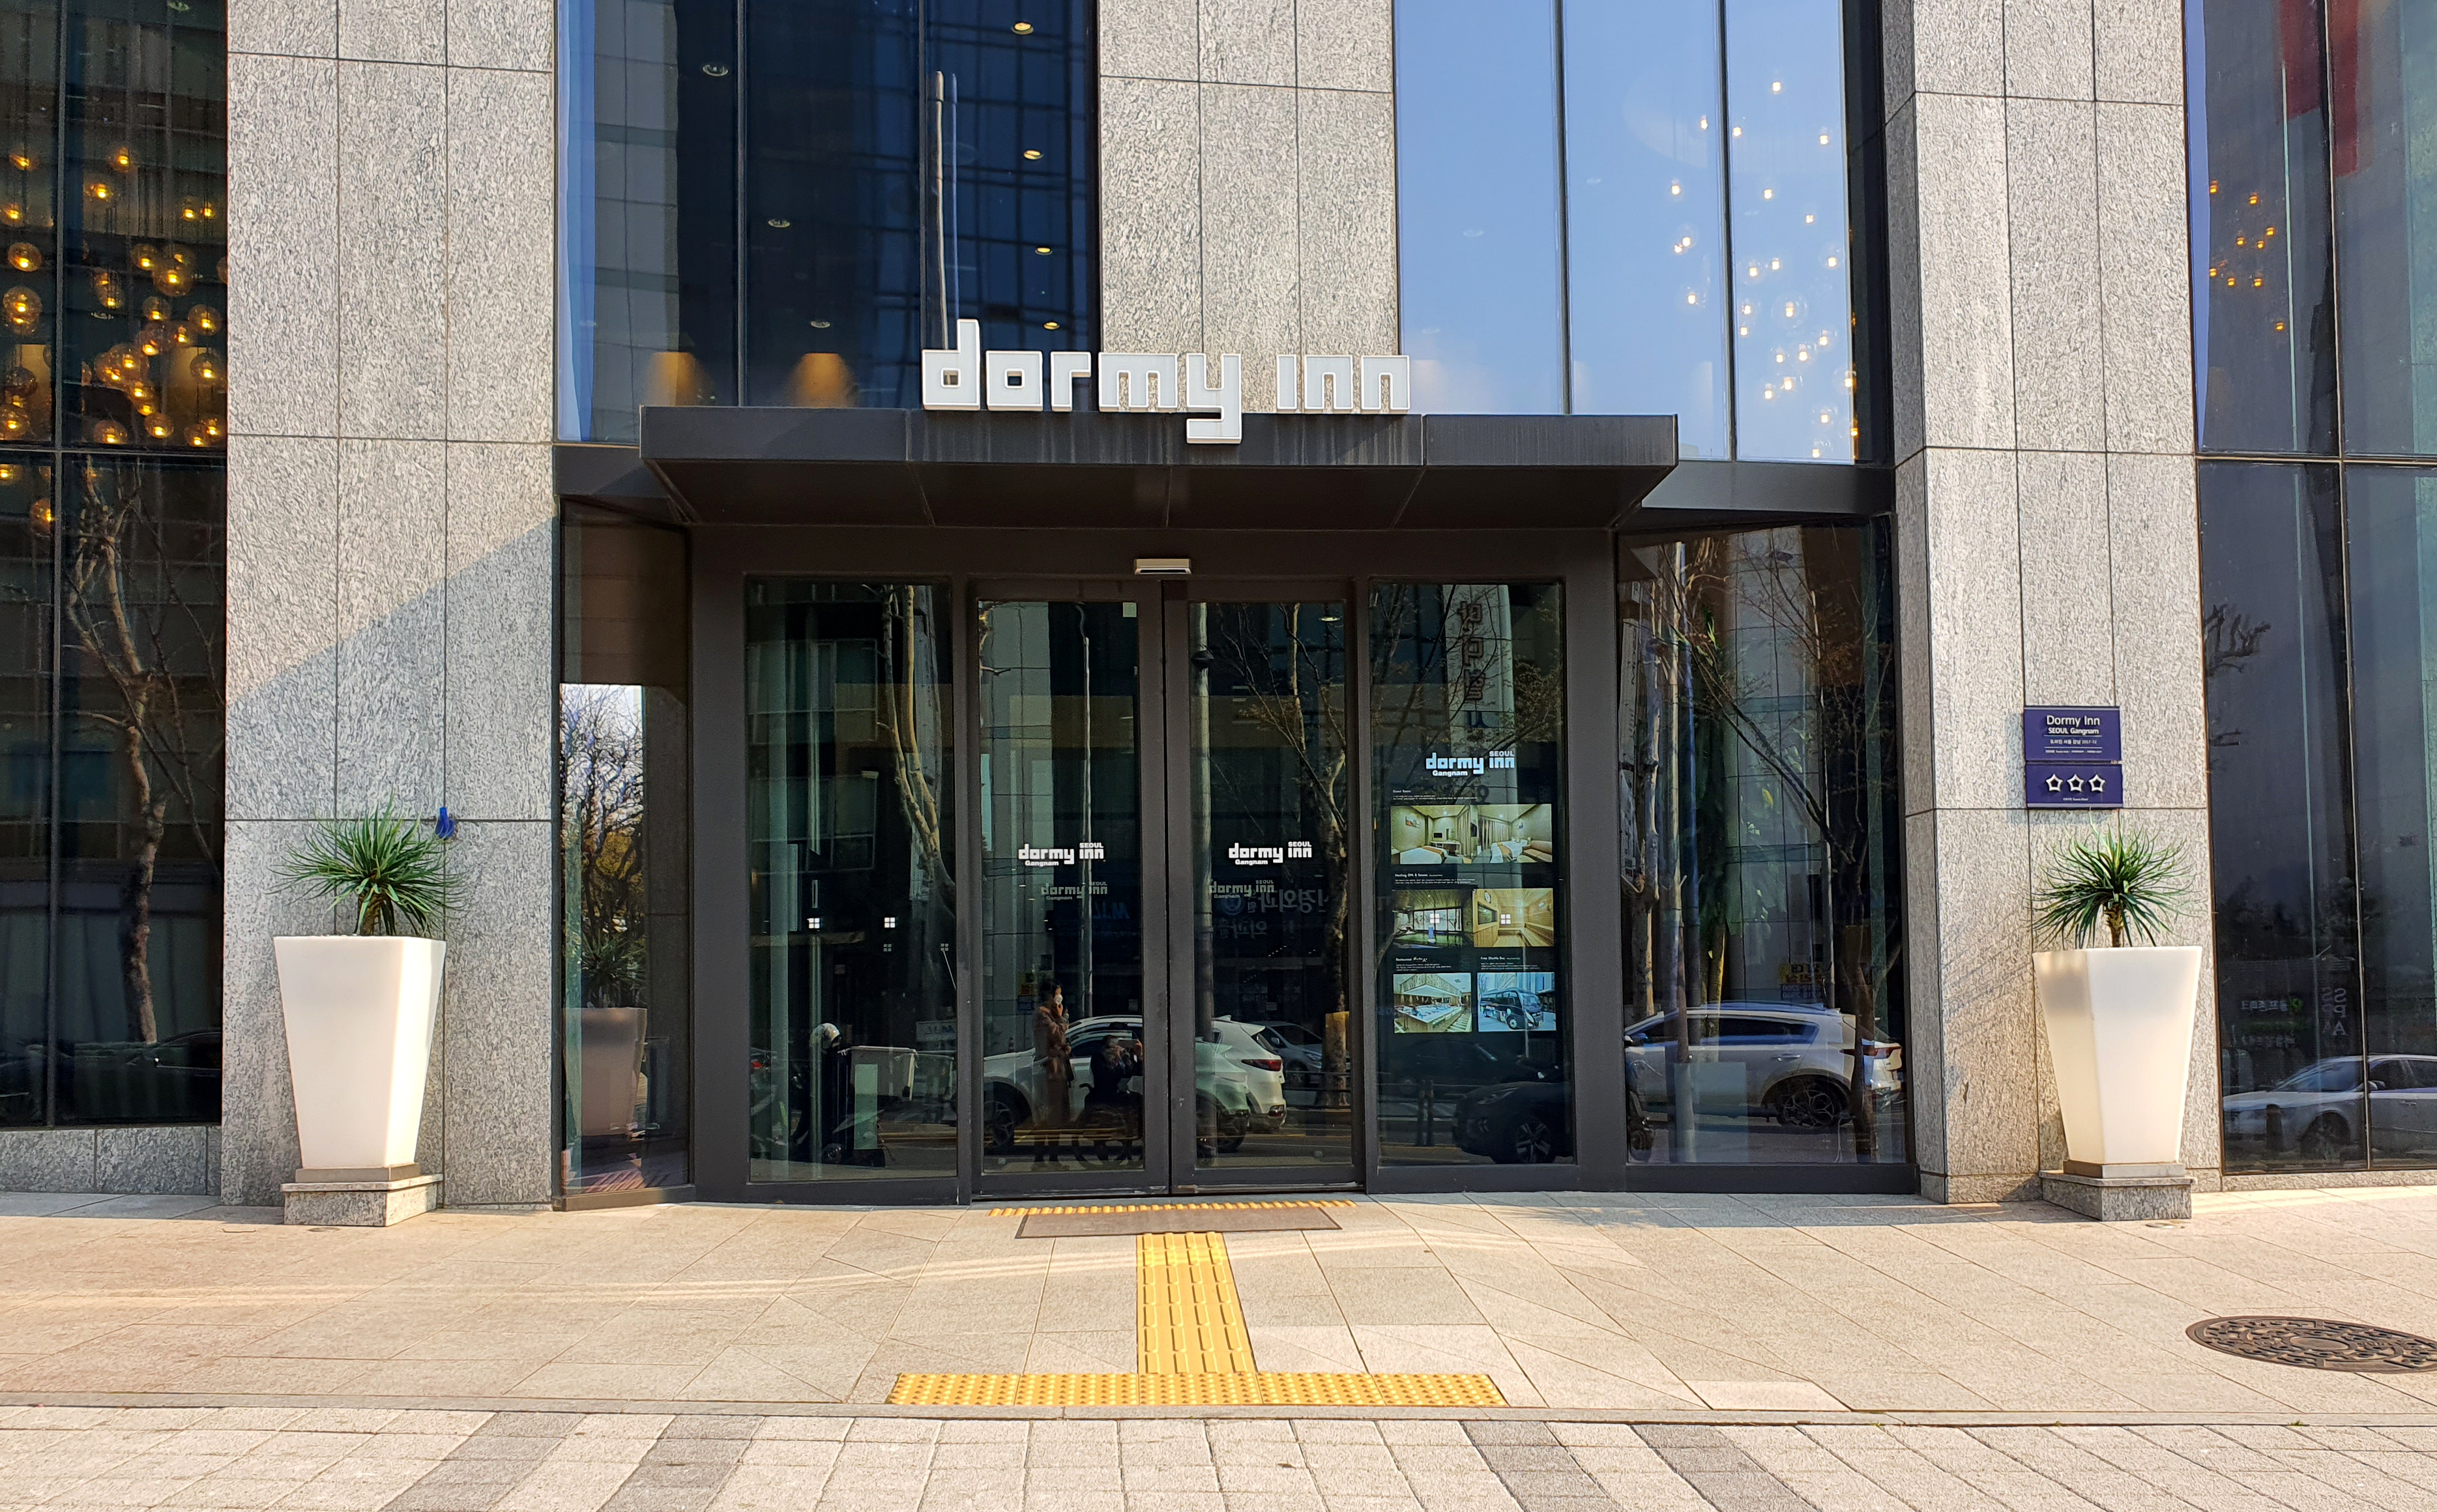 Dormy Inn Seoul Gangnam1 : The main entrance of the hotel with signboard